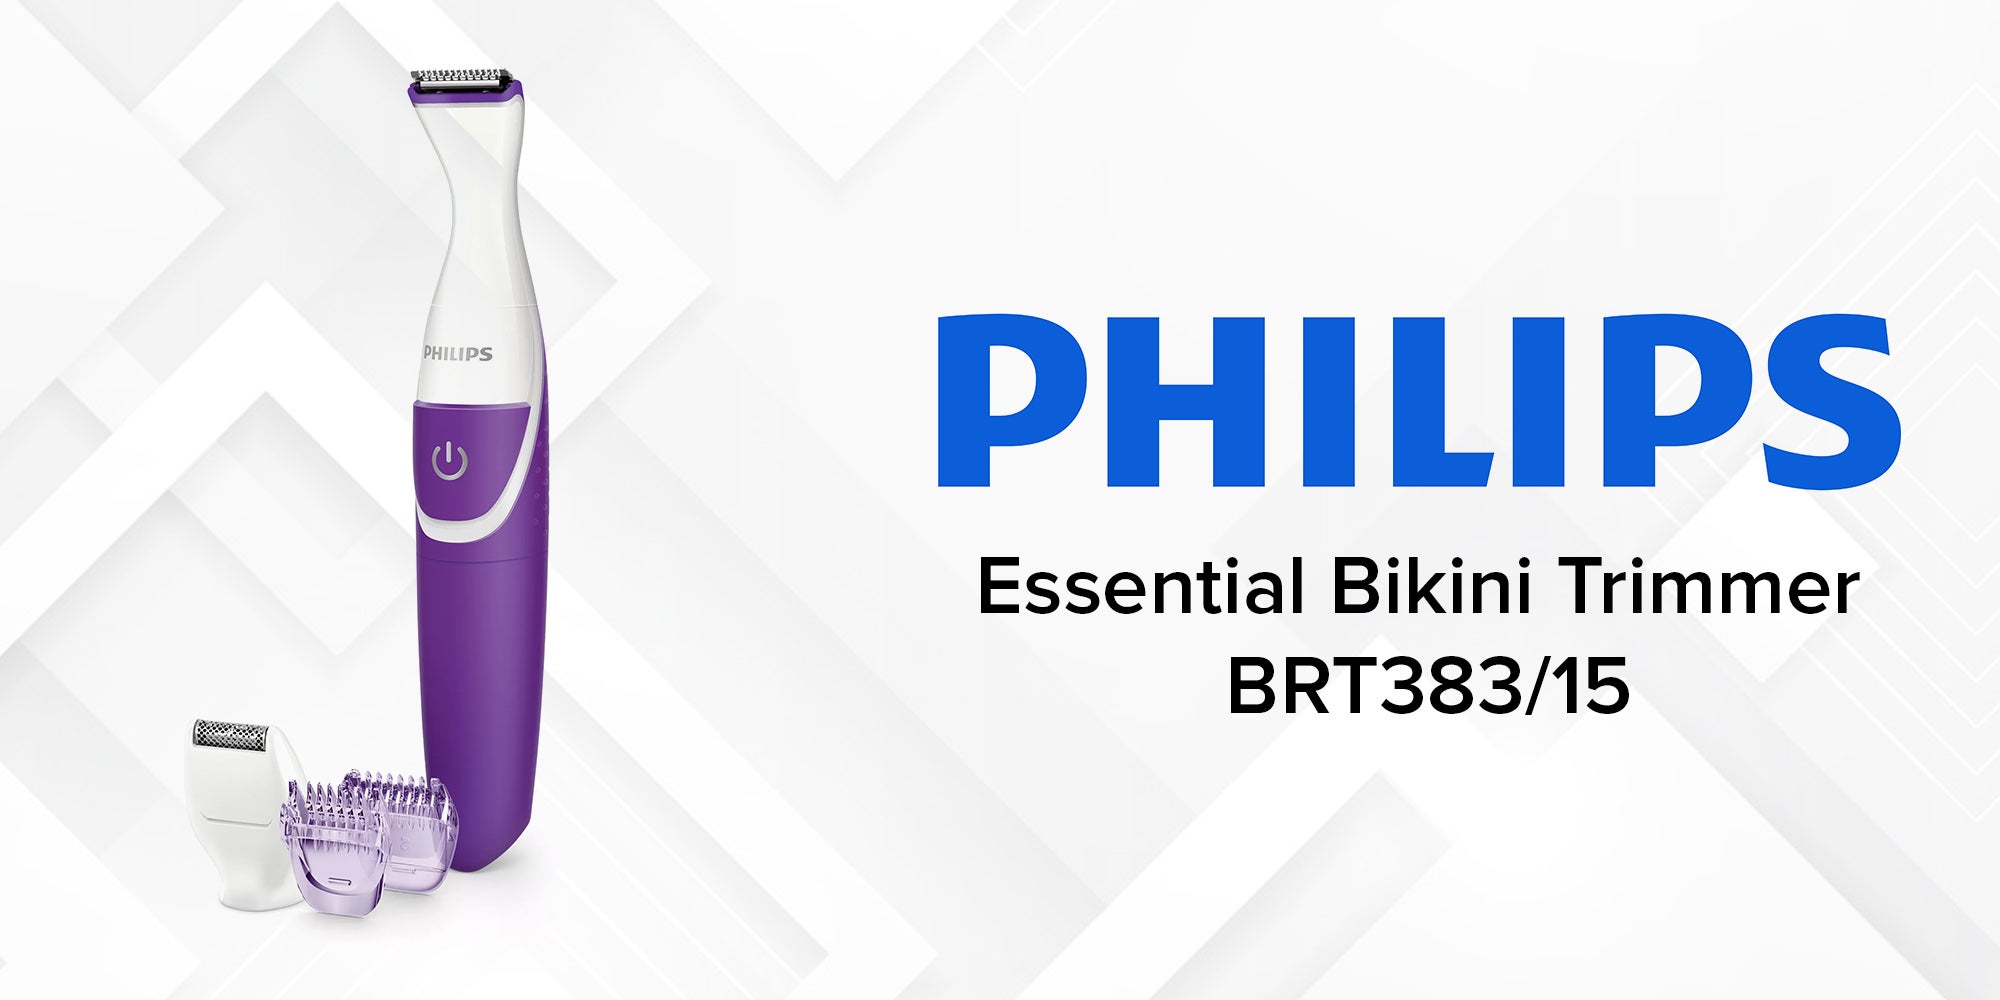 Shop Philips Essential Bikini Trimmer BRT383/15, 2 Years Warranty  Purple/White 1.61 x 3.58 x 7.48cm online in Dubai, Abu Dhabi and all UAE